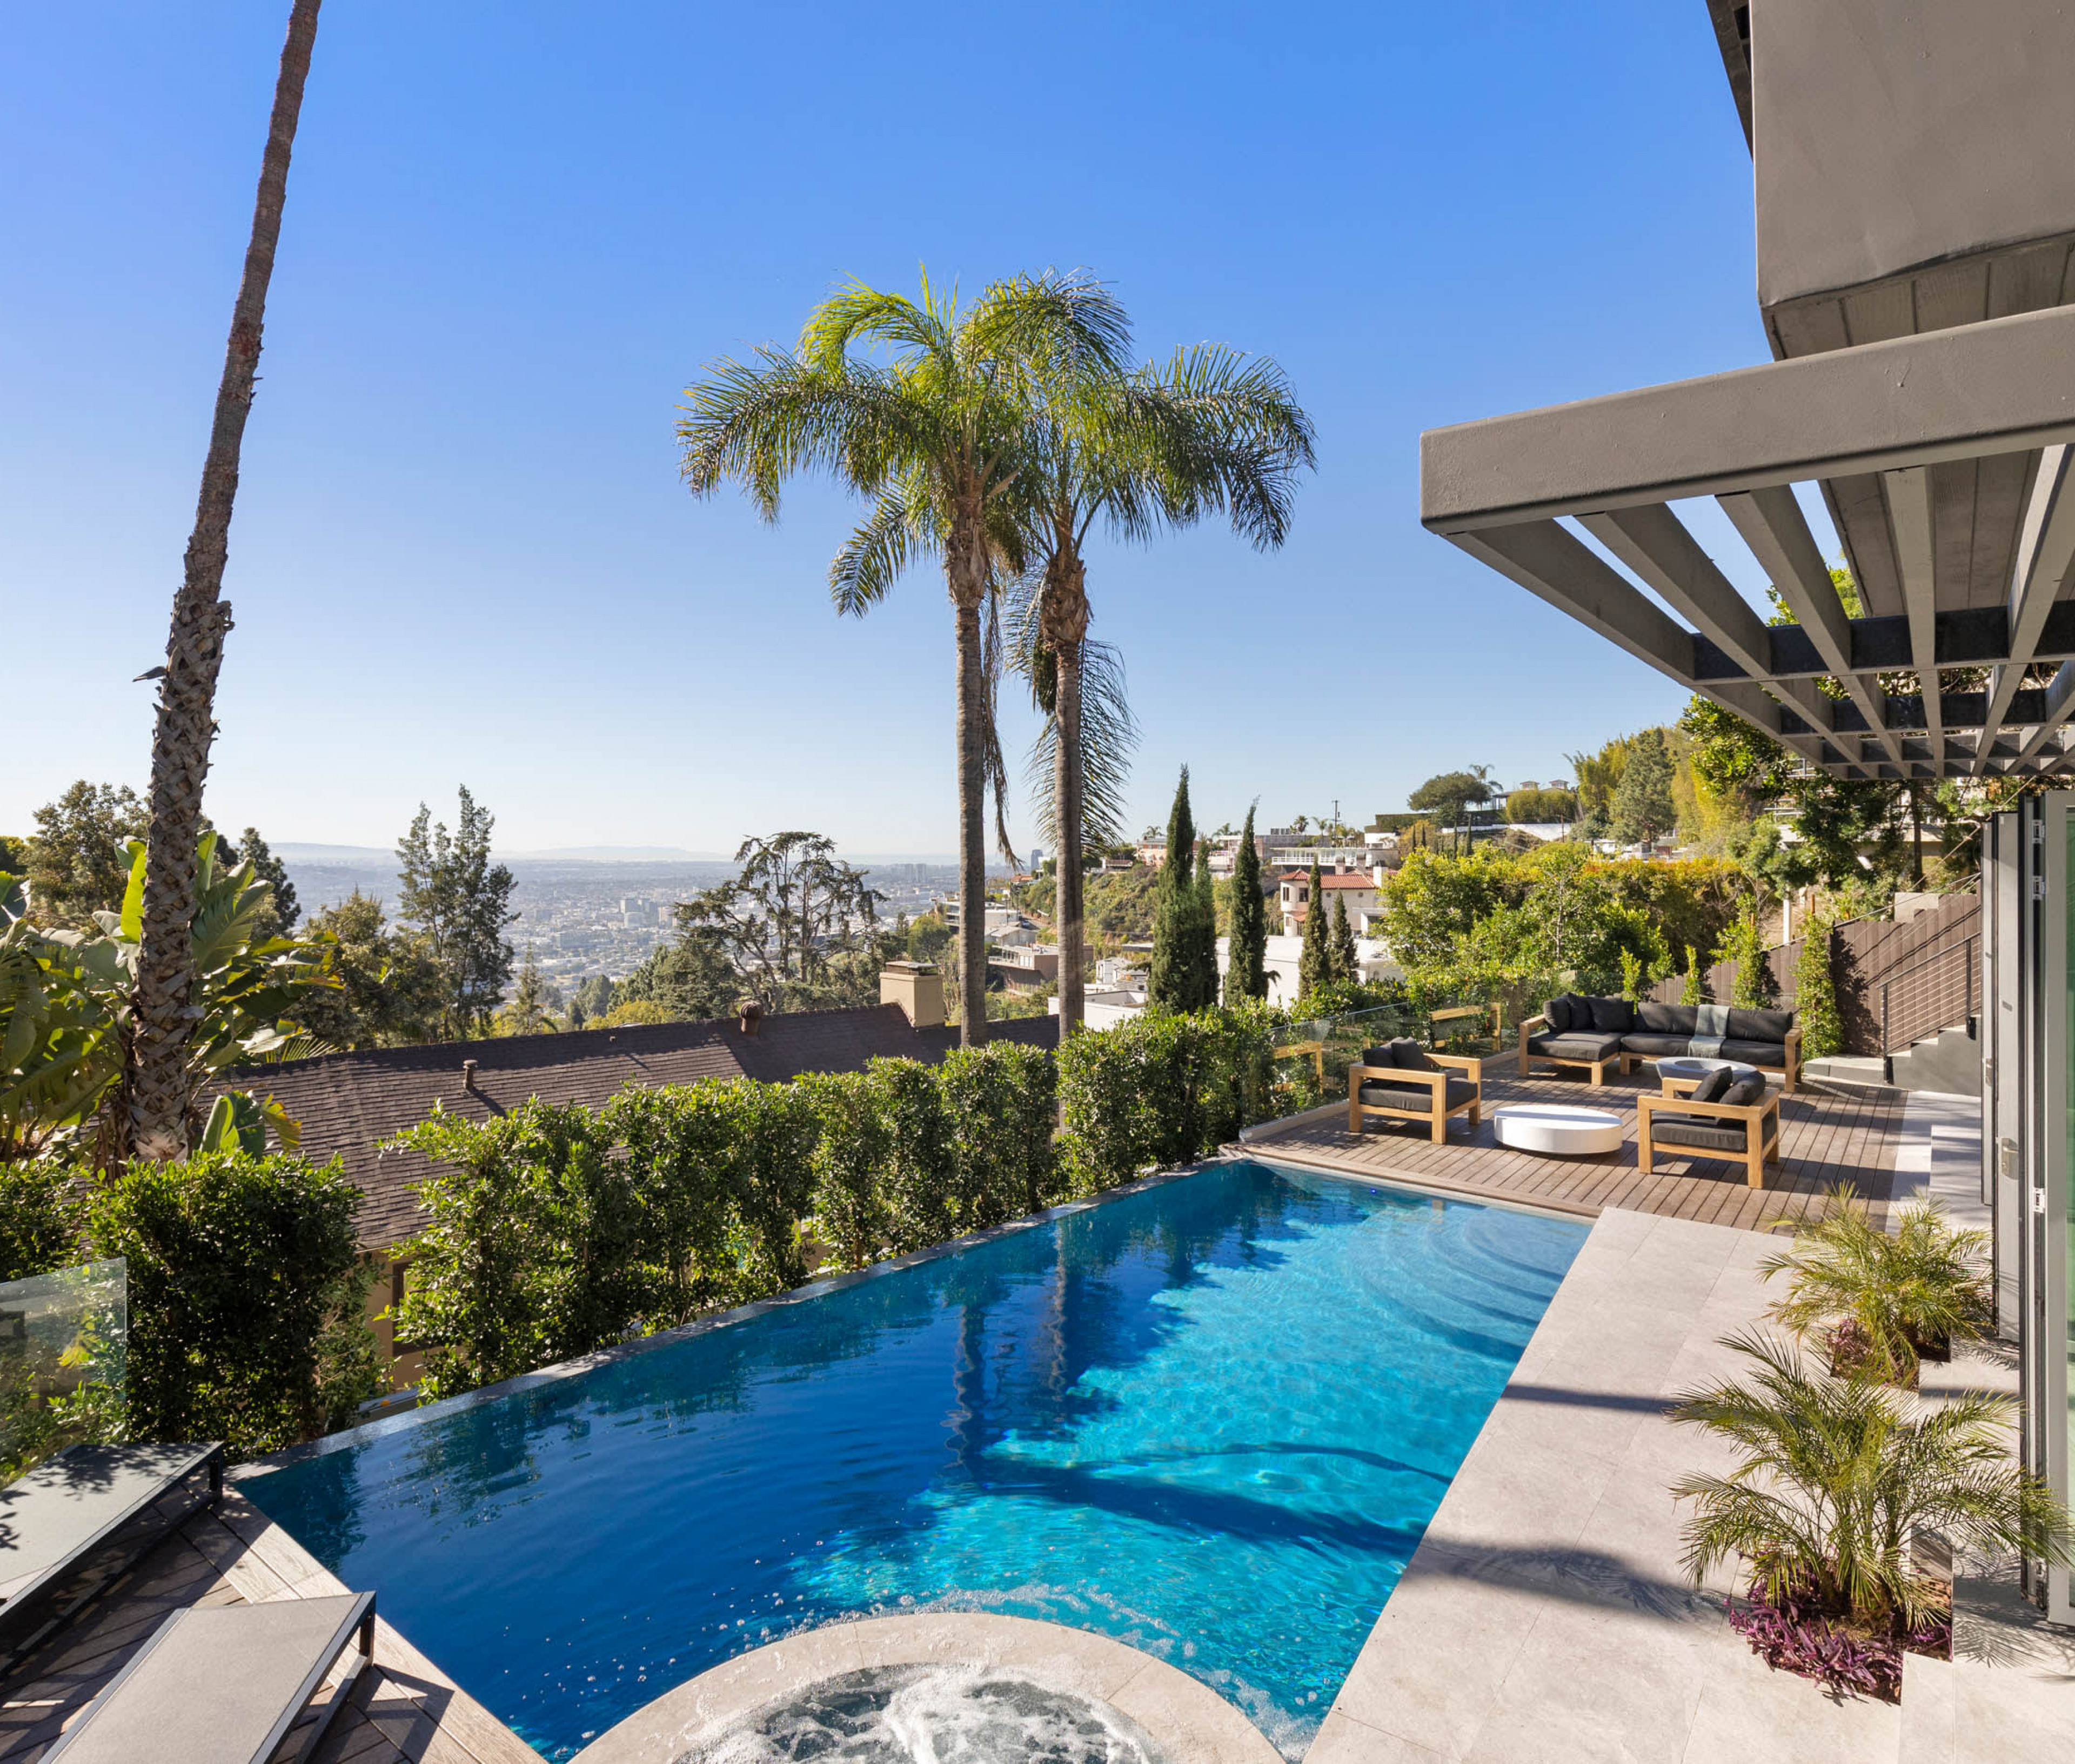 Los Angeles 185 vacation rentals with pool near disneyland